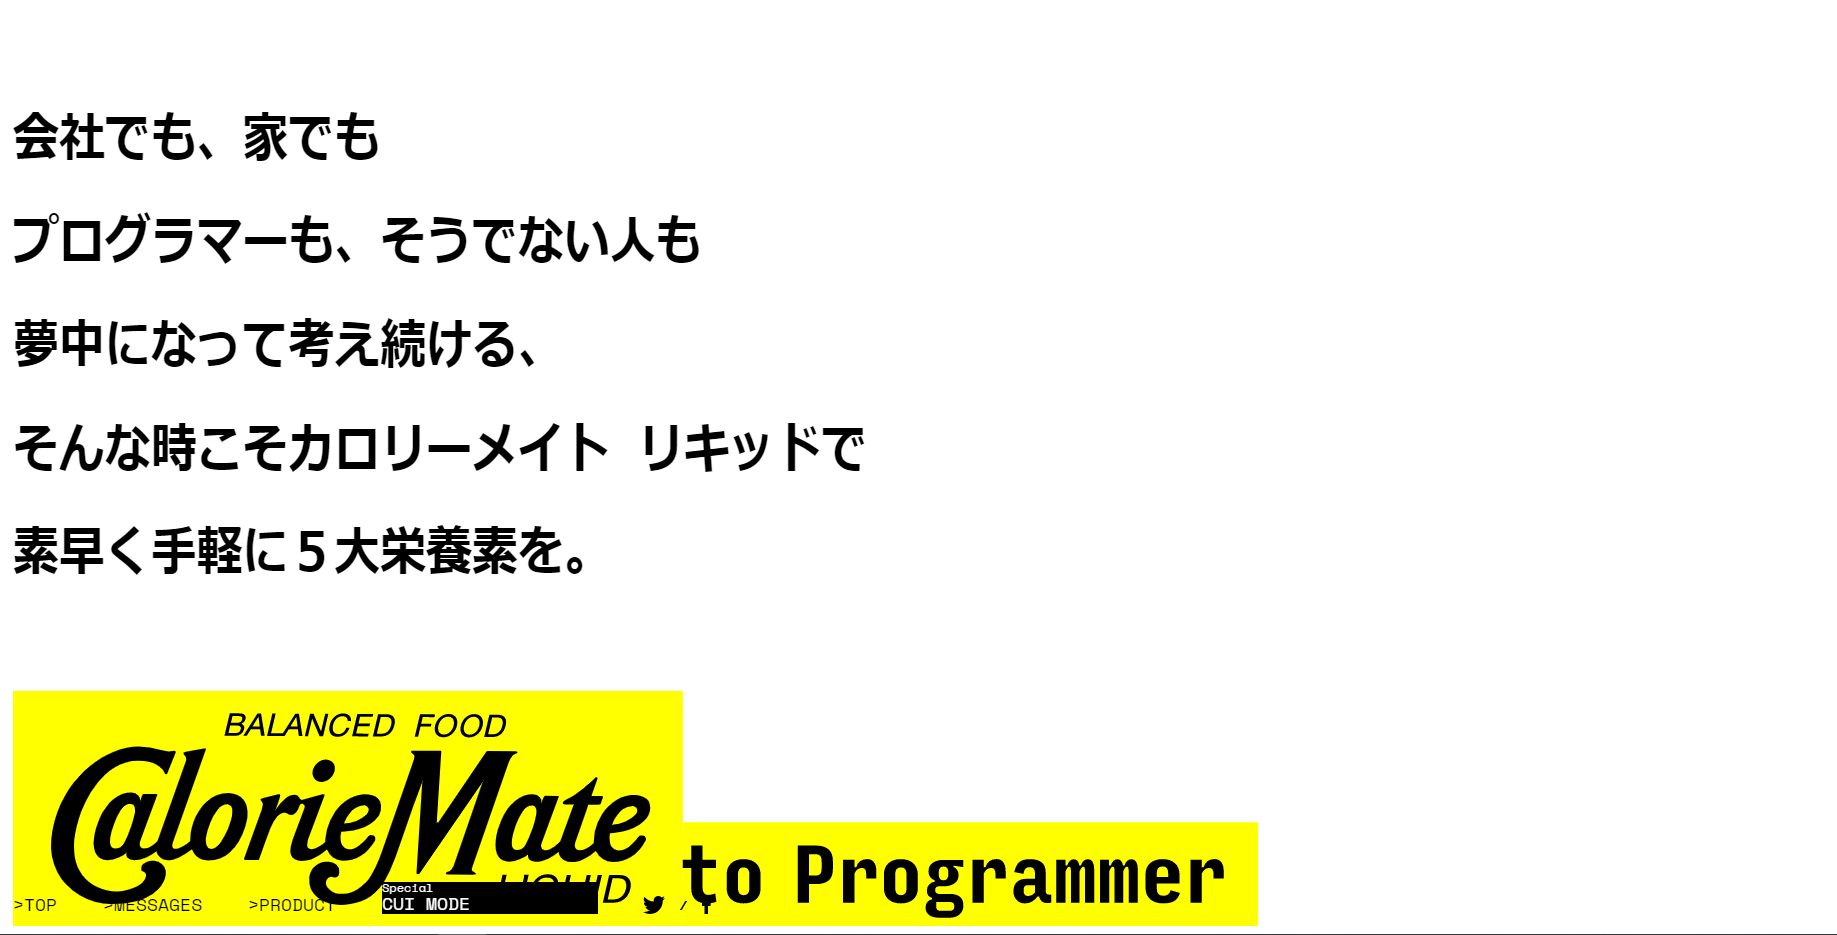 大塚製薬株式会社 CalorieMate to Programmer